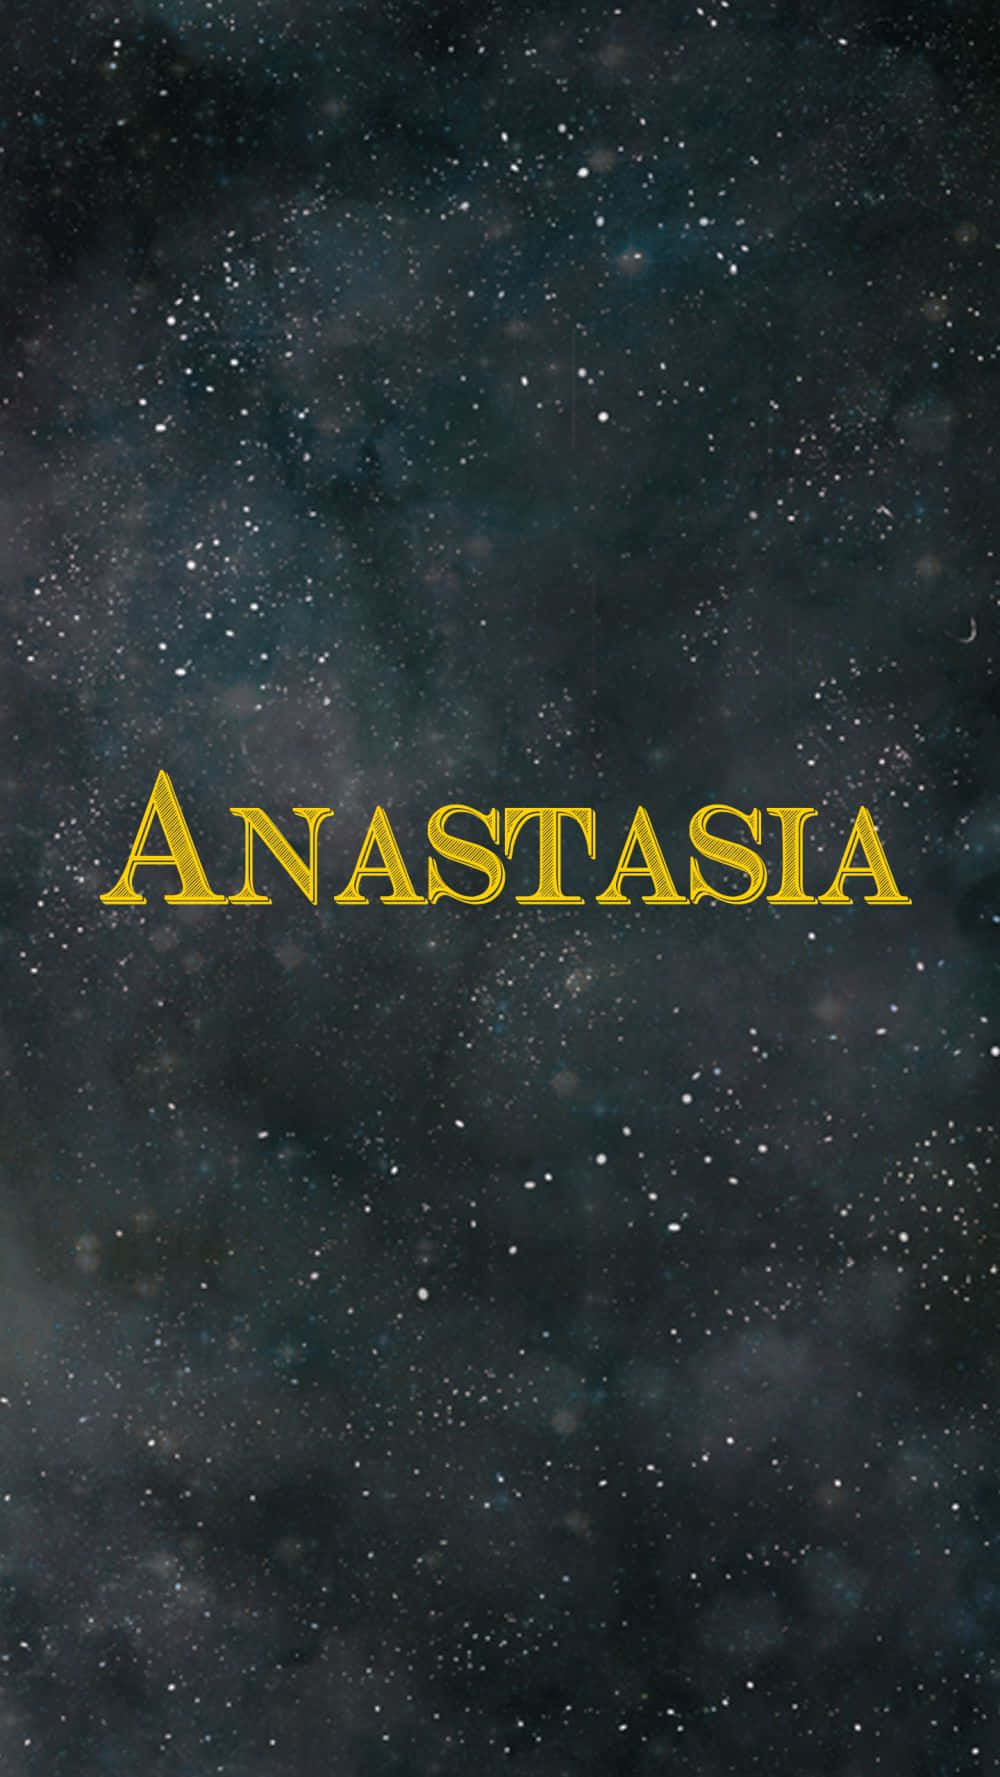 Anastasia Pictures